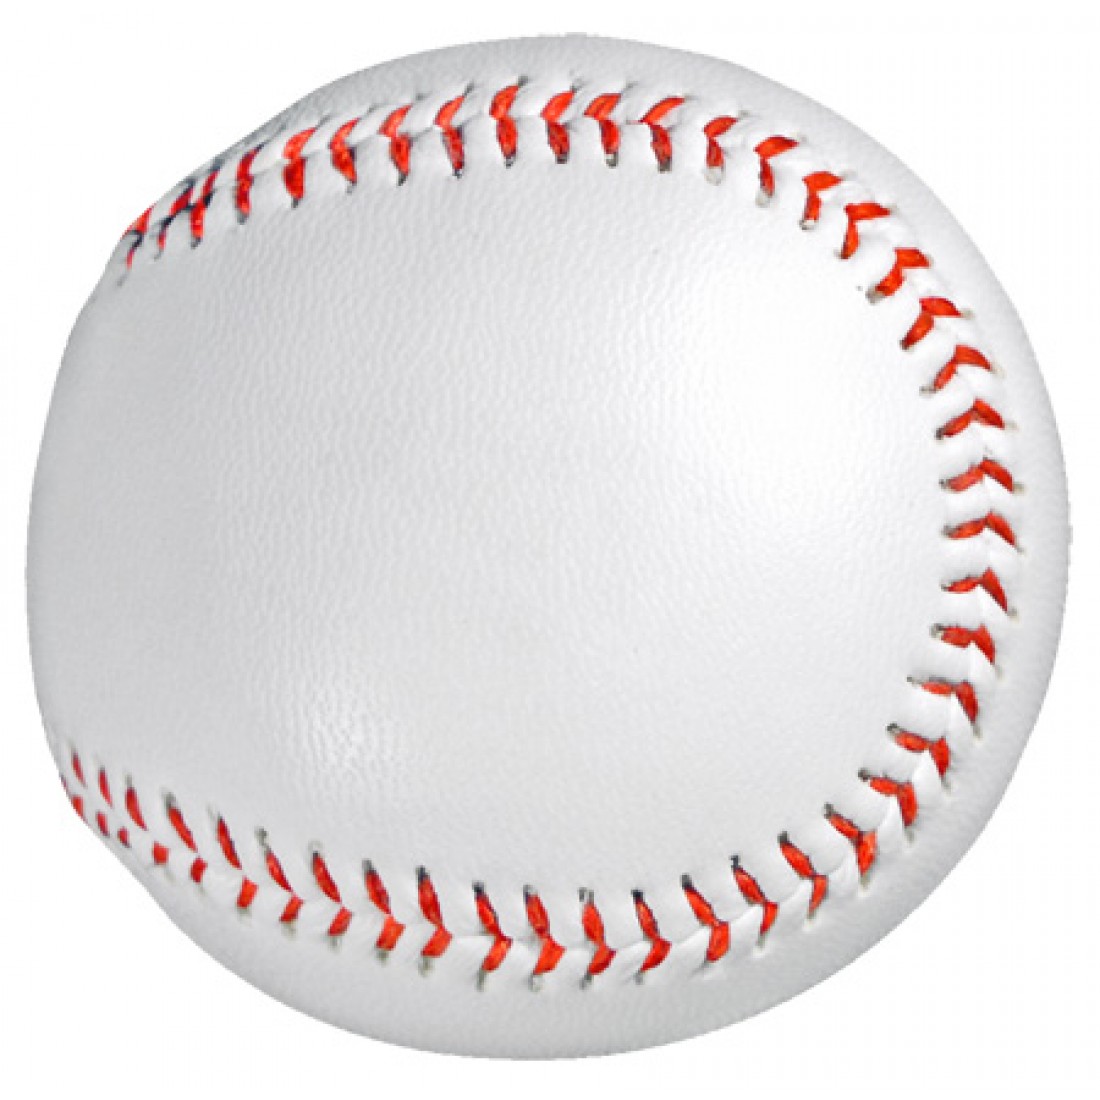 Baseball ball. Бейсбольный мяч кожаный. Мяч для бейсбола. Коричневый бейсбольный мяч. Бейсбольный мяч американский.